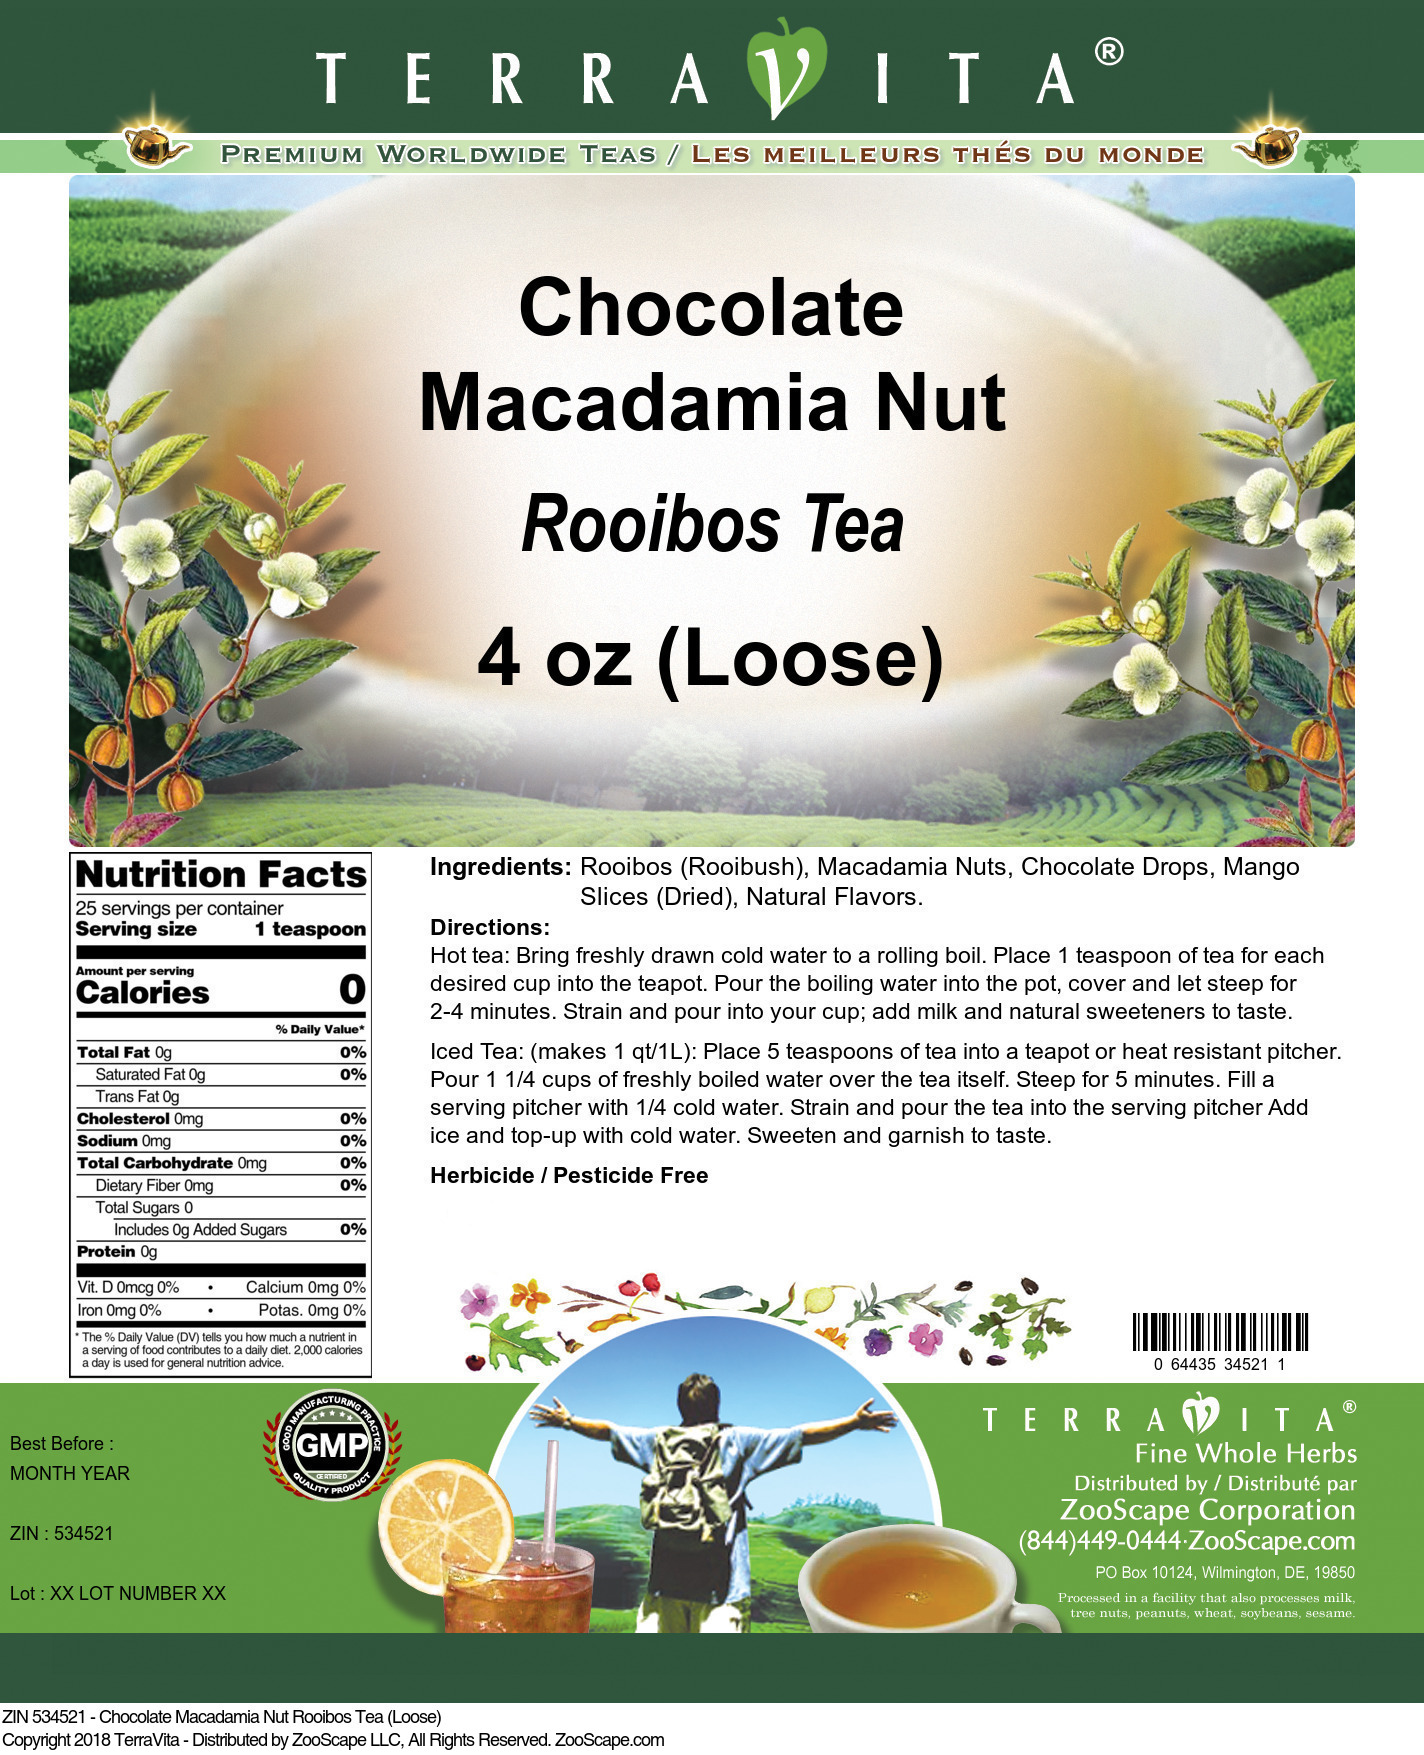 Chocolate Macadamia Nut Rooibos Tea (Loose) - Label